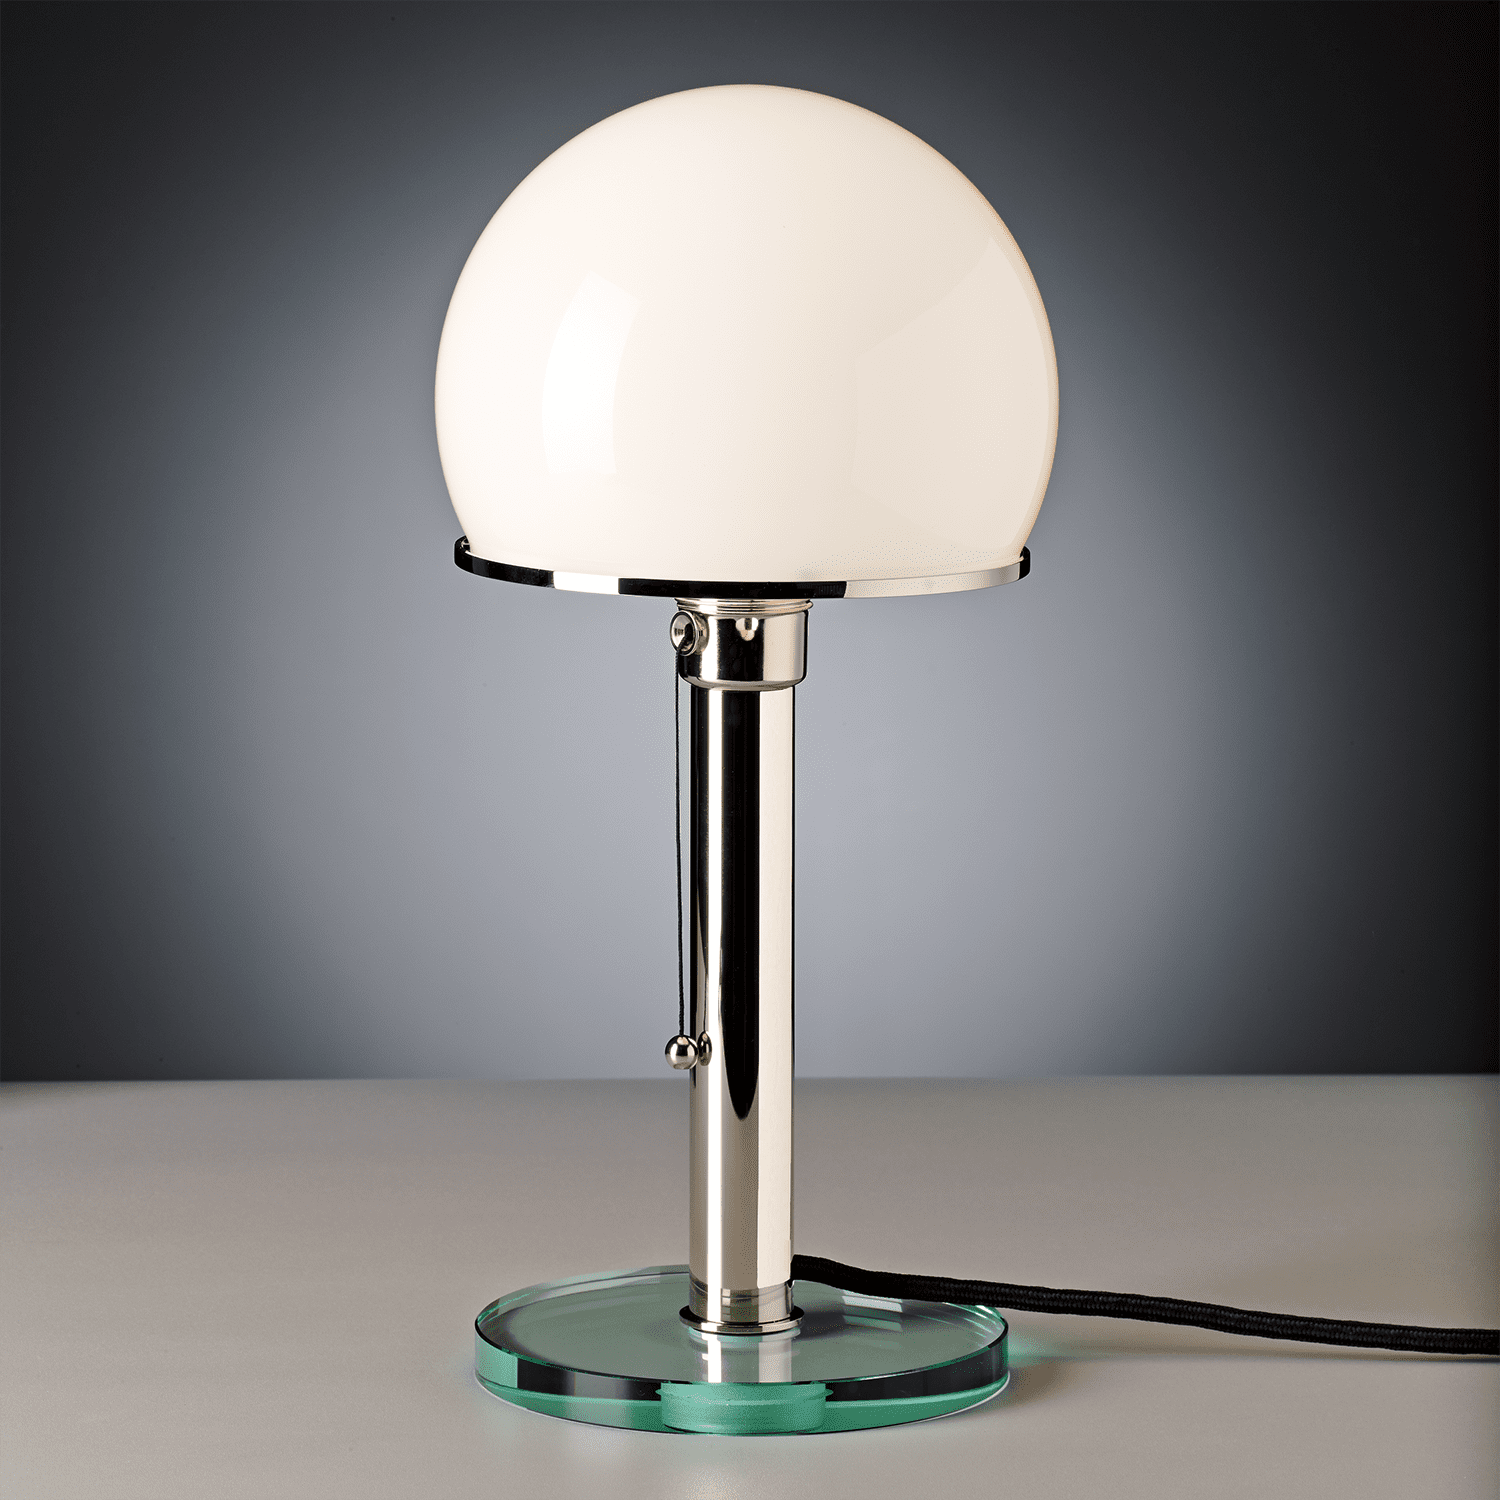 Bauhaus Wagenfeld Lamp WG 25 GL by Tecnolumenの画像